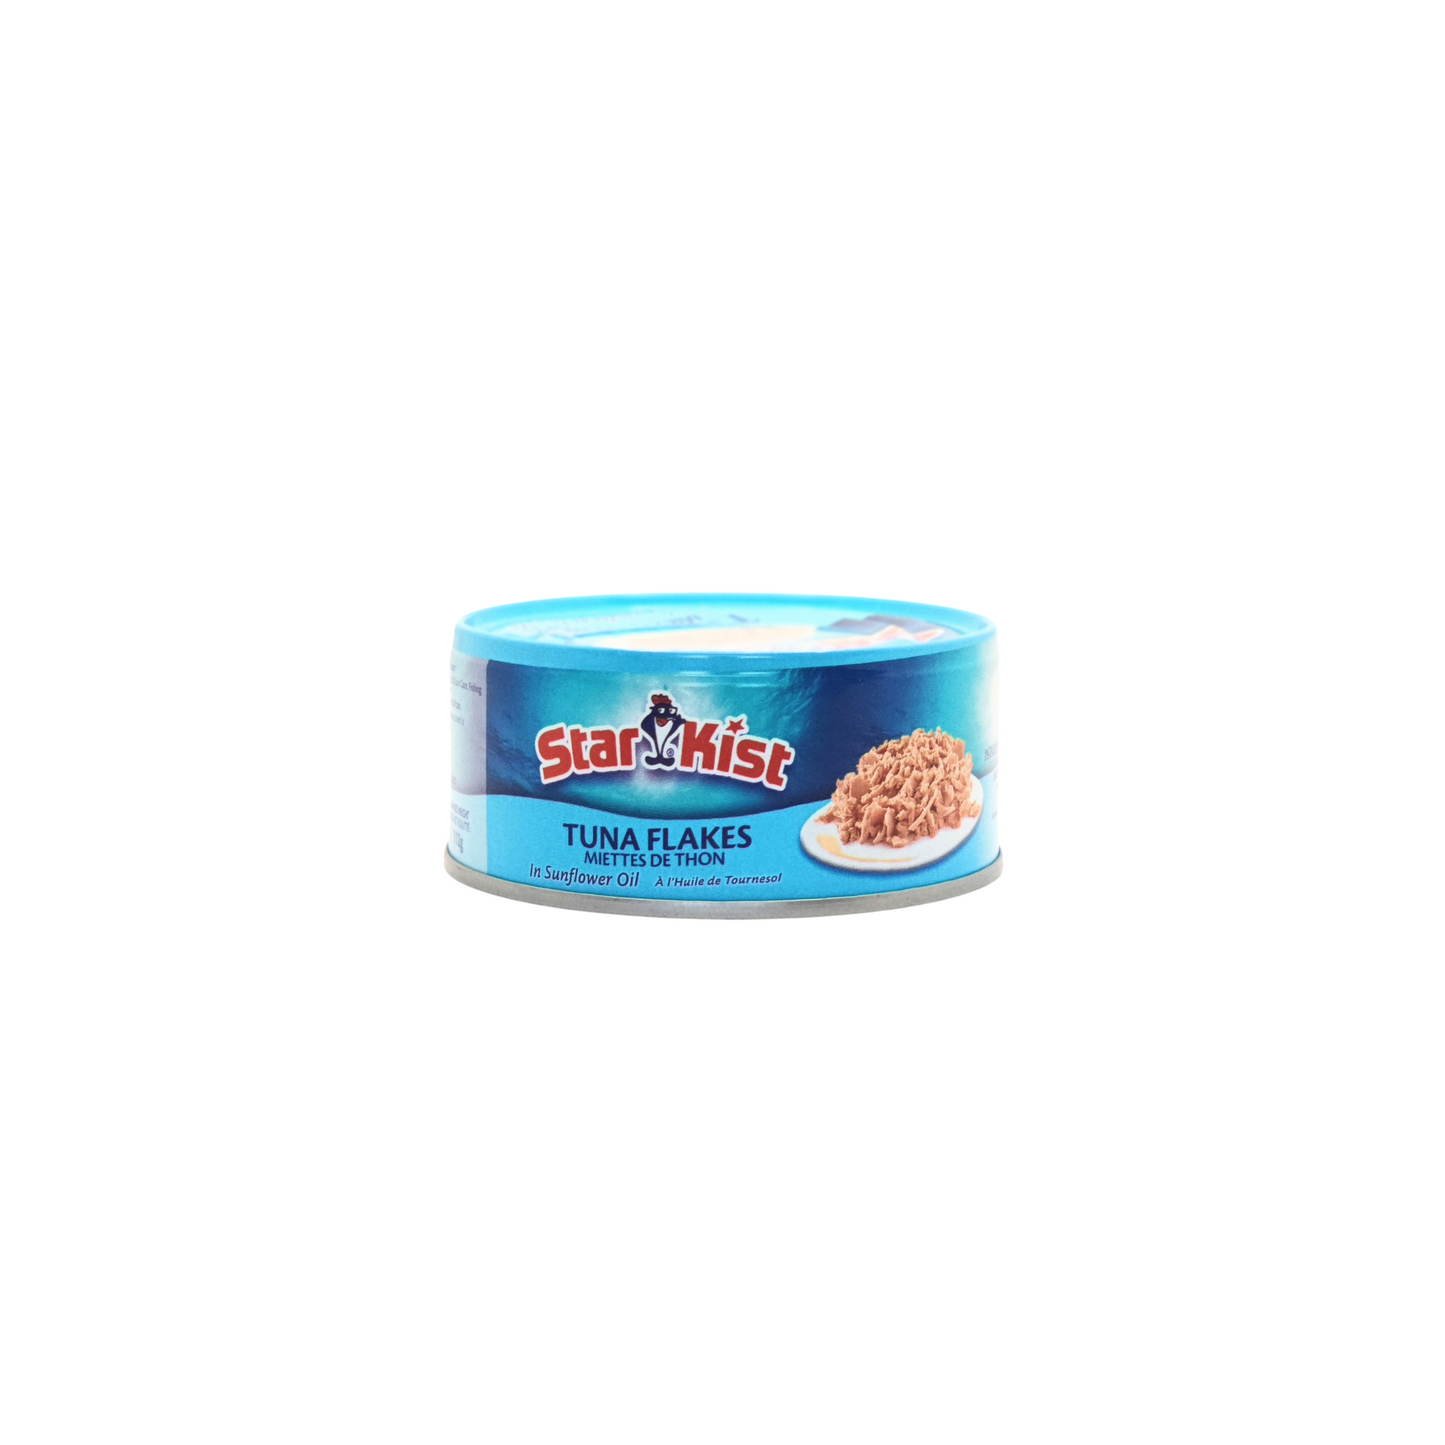 160 gram can of star kist tuna flakes